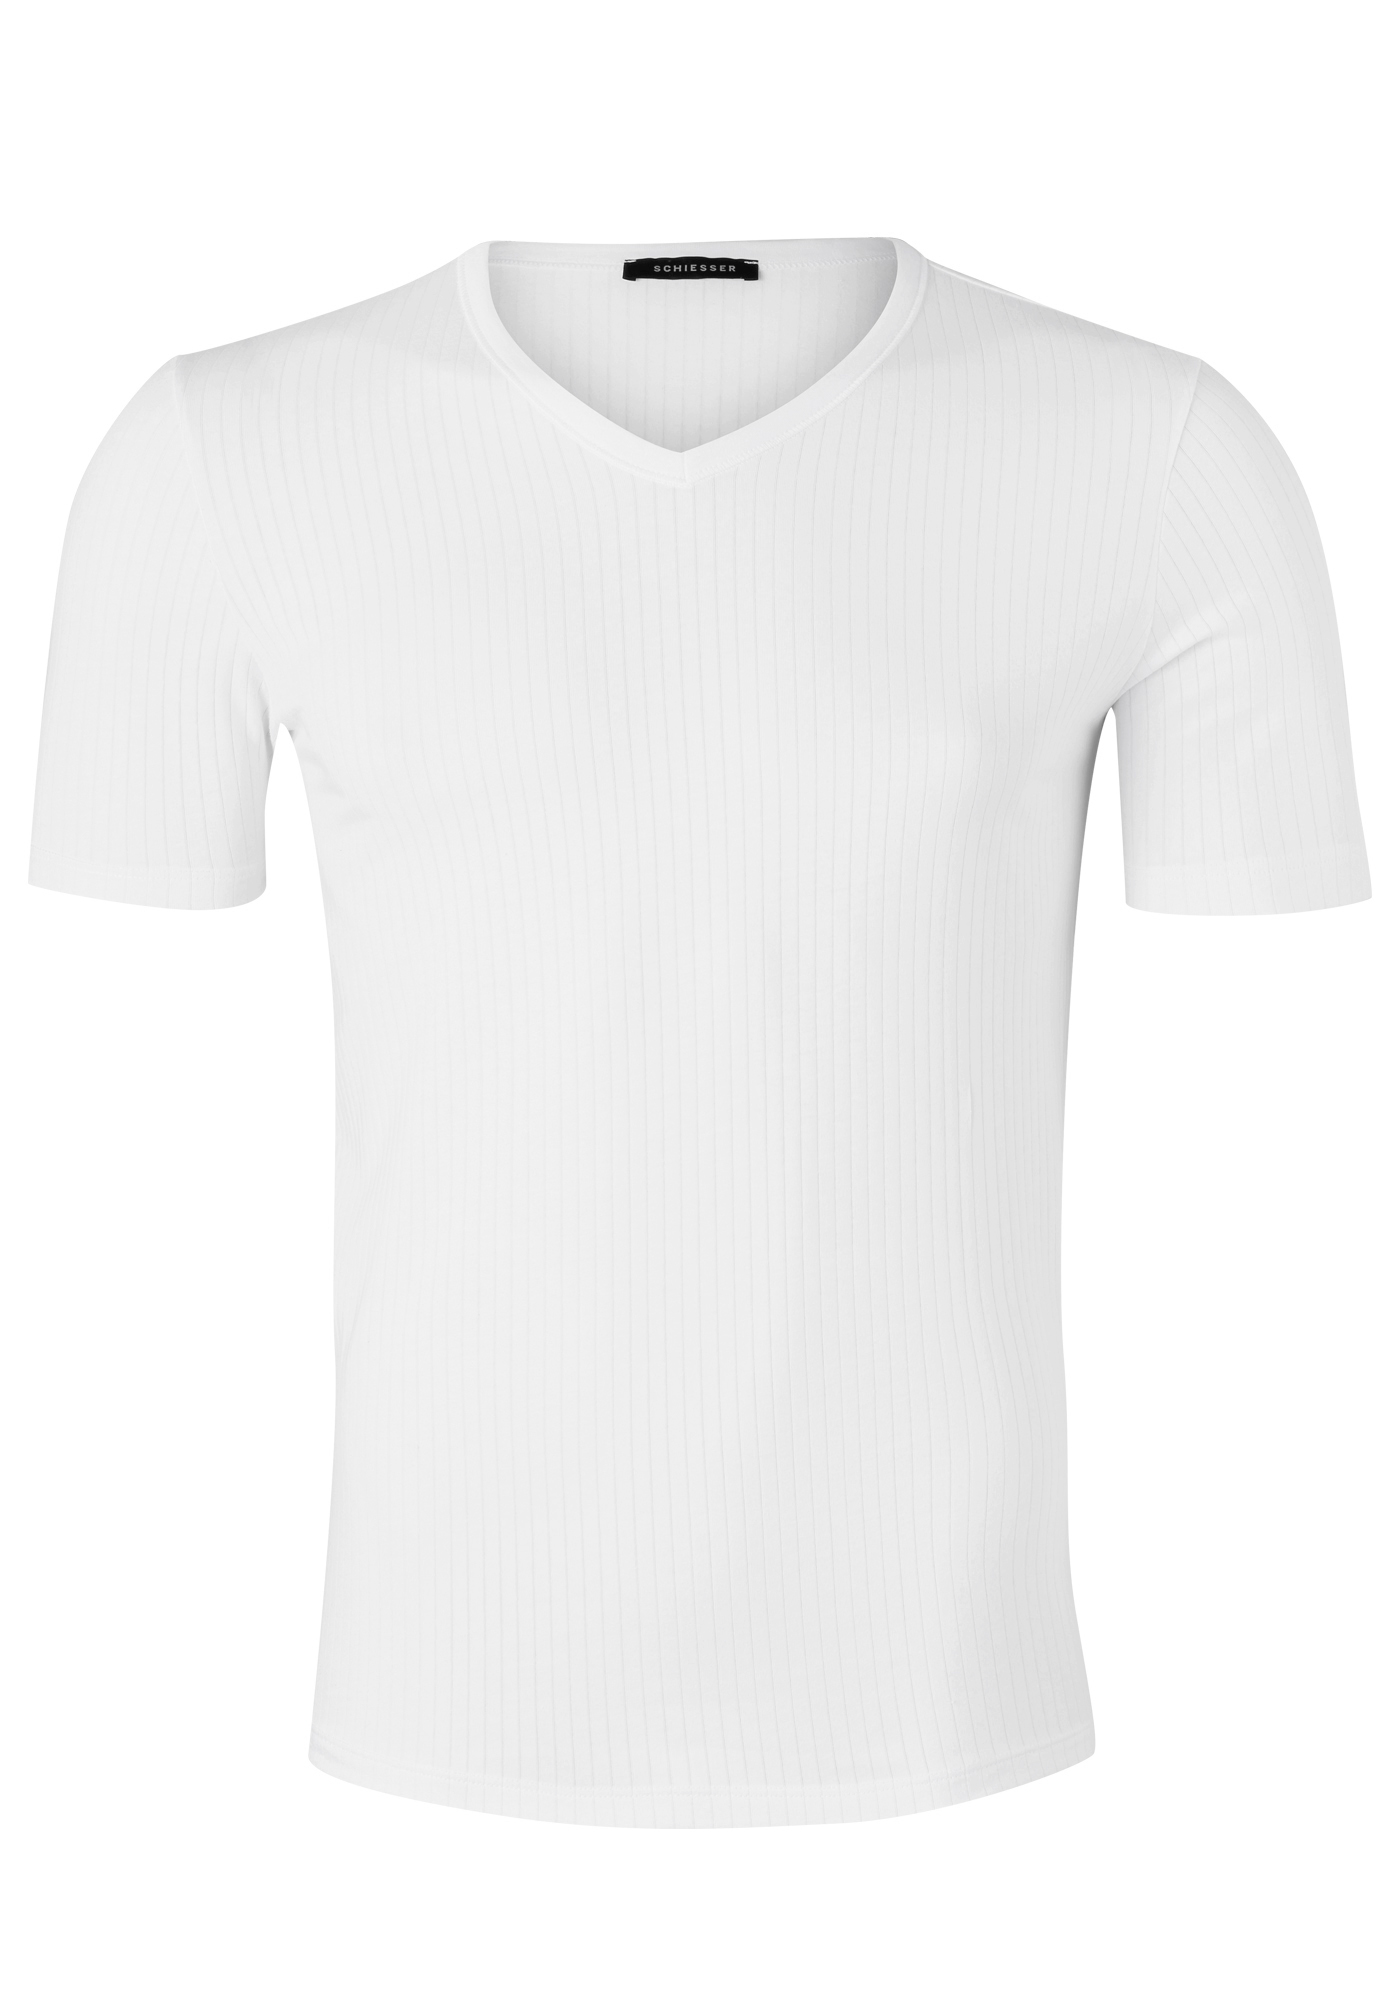 Mode Shirts V-hals shirts cpm V-hals shirt wit casual uitstraling 